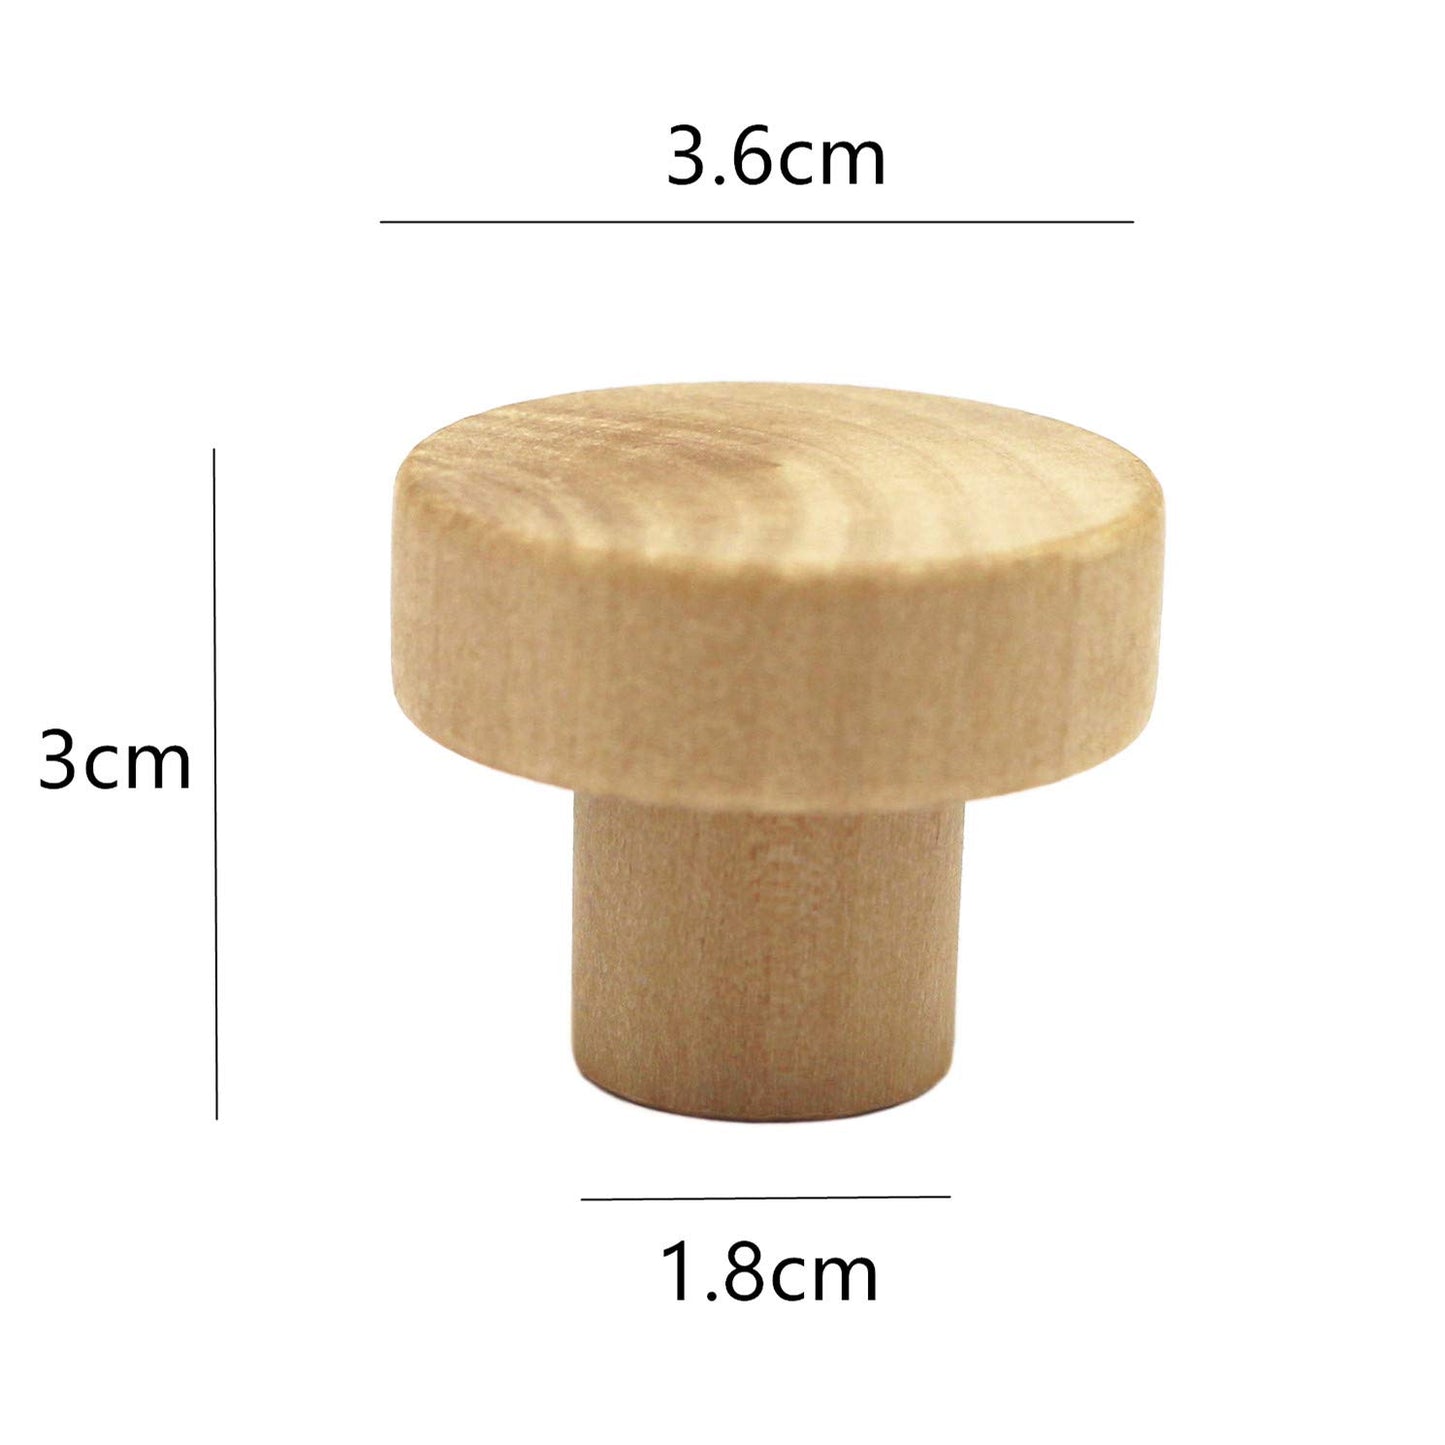 WEICHUAN 20PCS Round Unfinished Wood Cabinet Furniture Drawer Knobs Pulls Handles (Diameter: 3.6cm Height: 3cm)